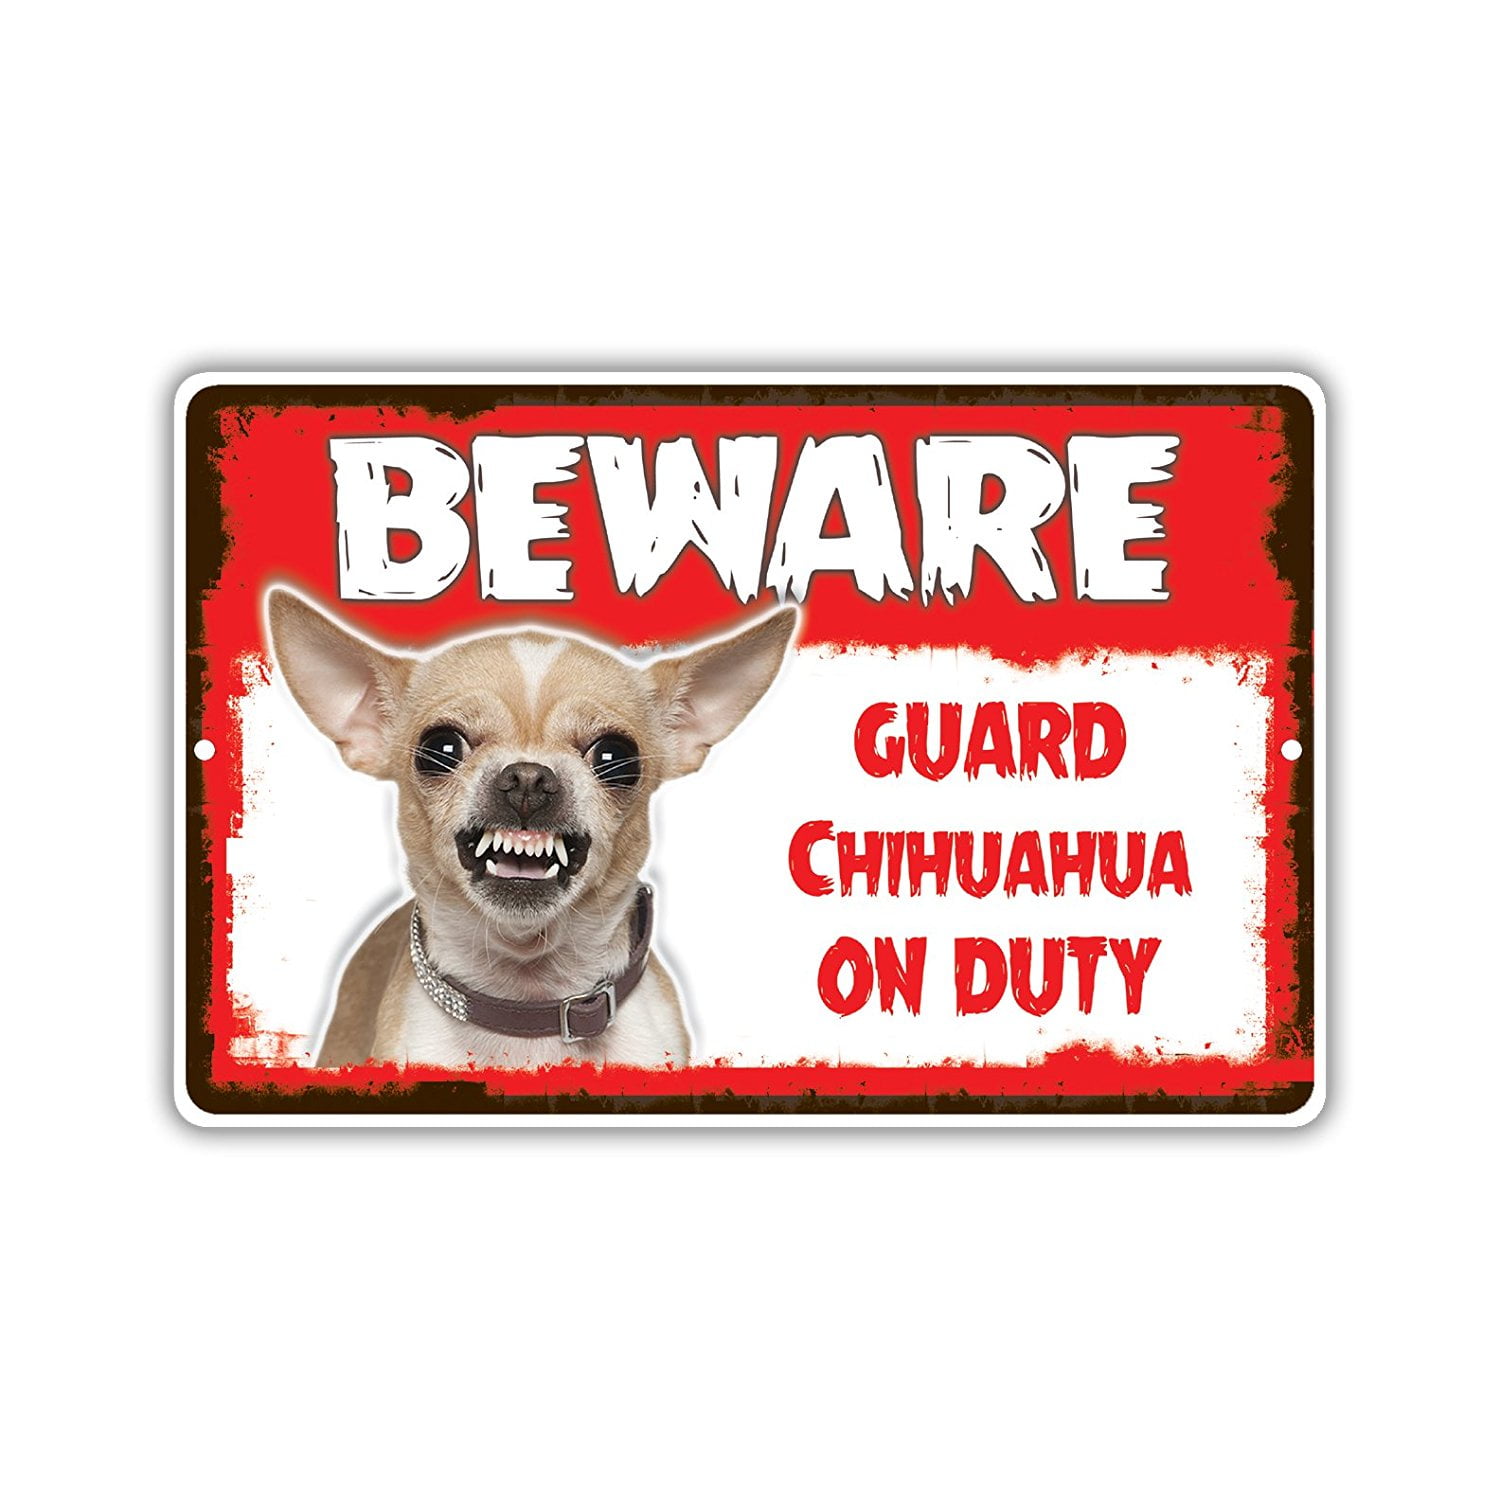 Warning No Pets Aluminum Metal 8" x 12" Sign Animals Dogs Premises Cats Park 